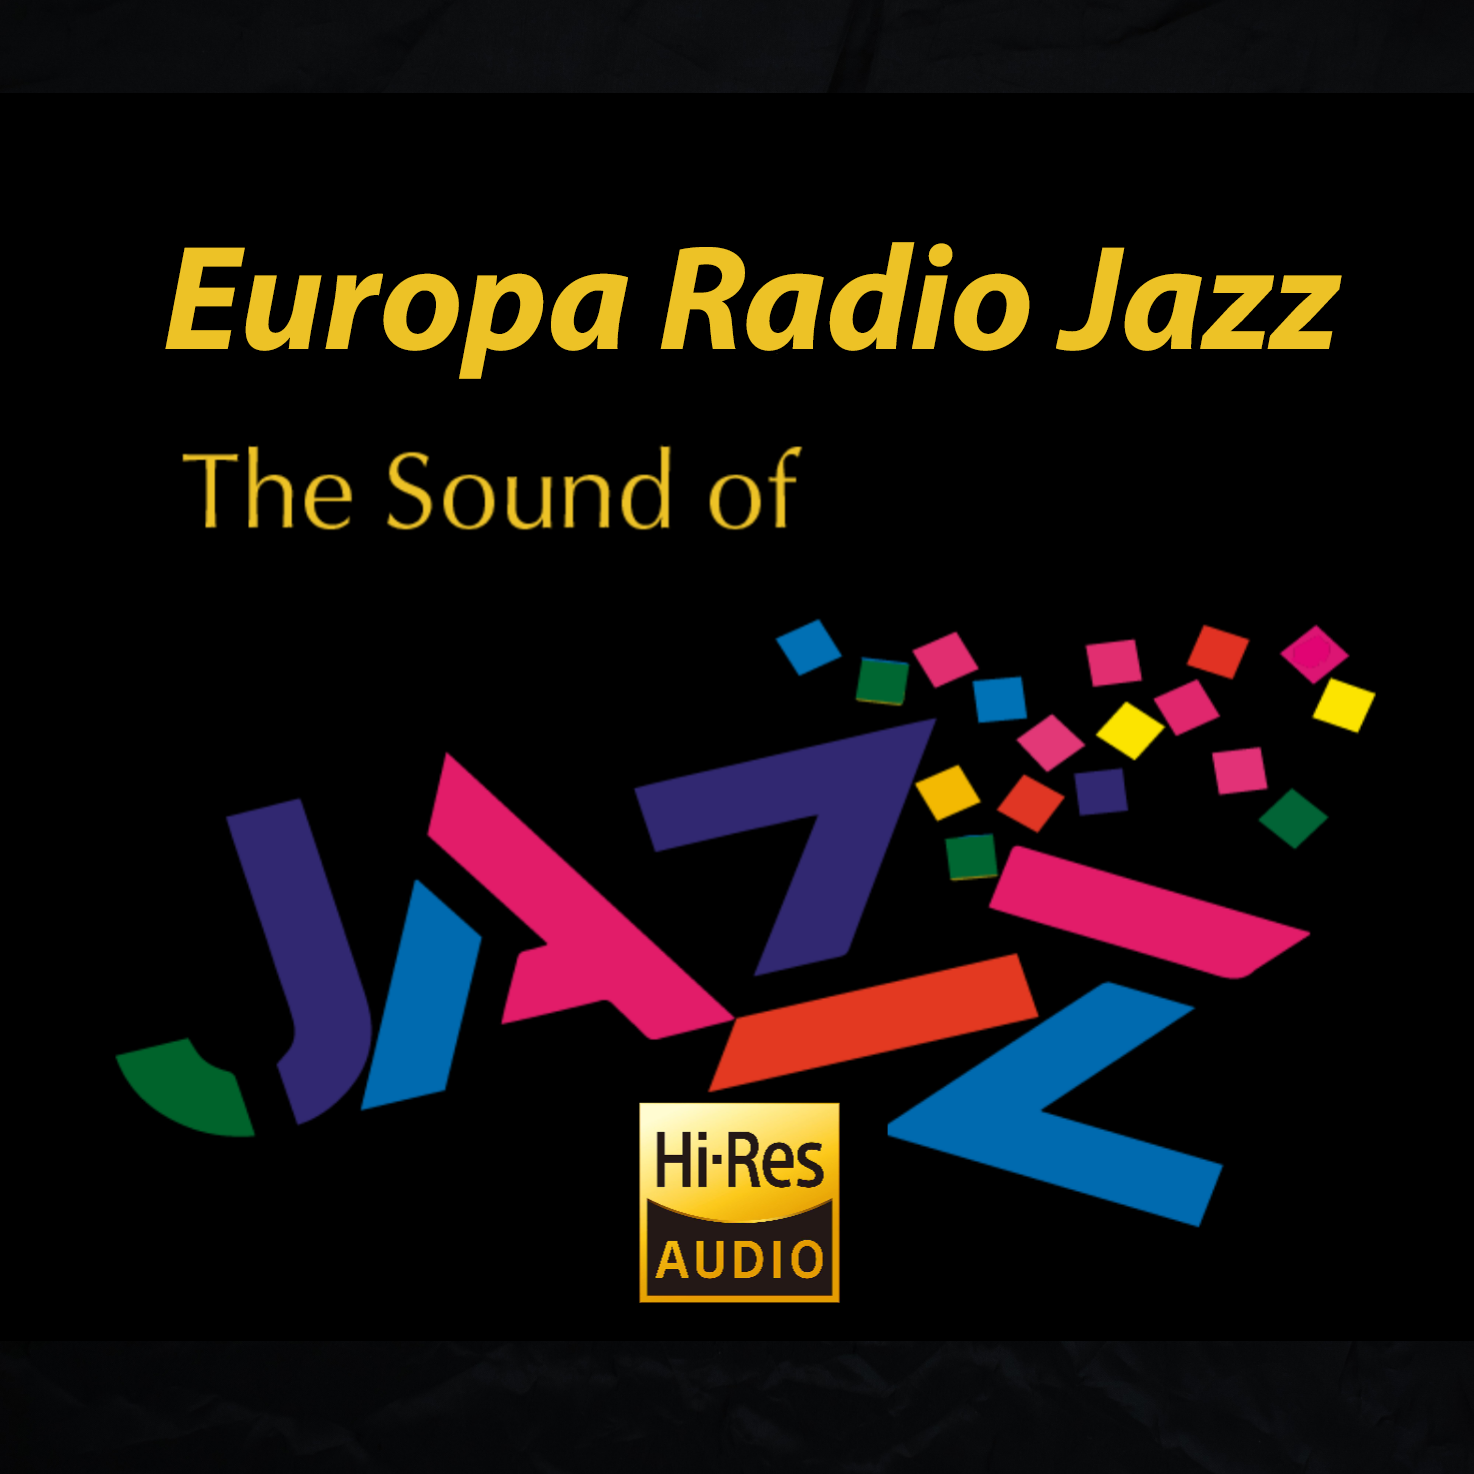 Europa Radio Jazz